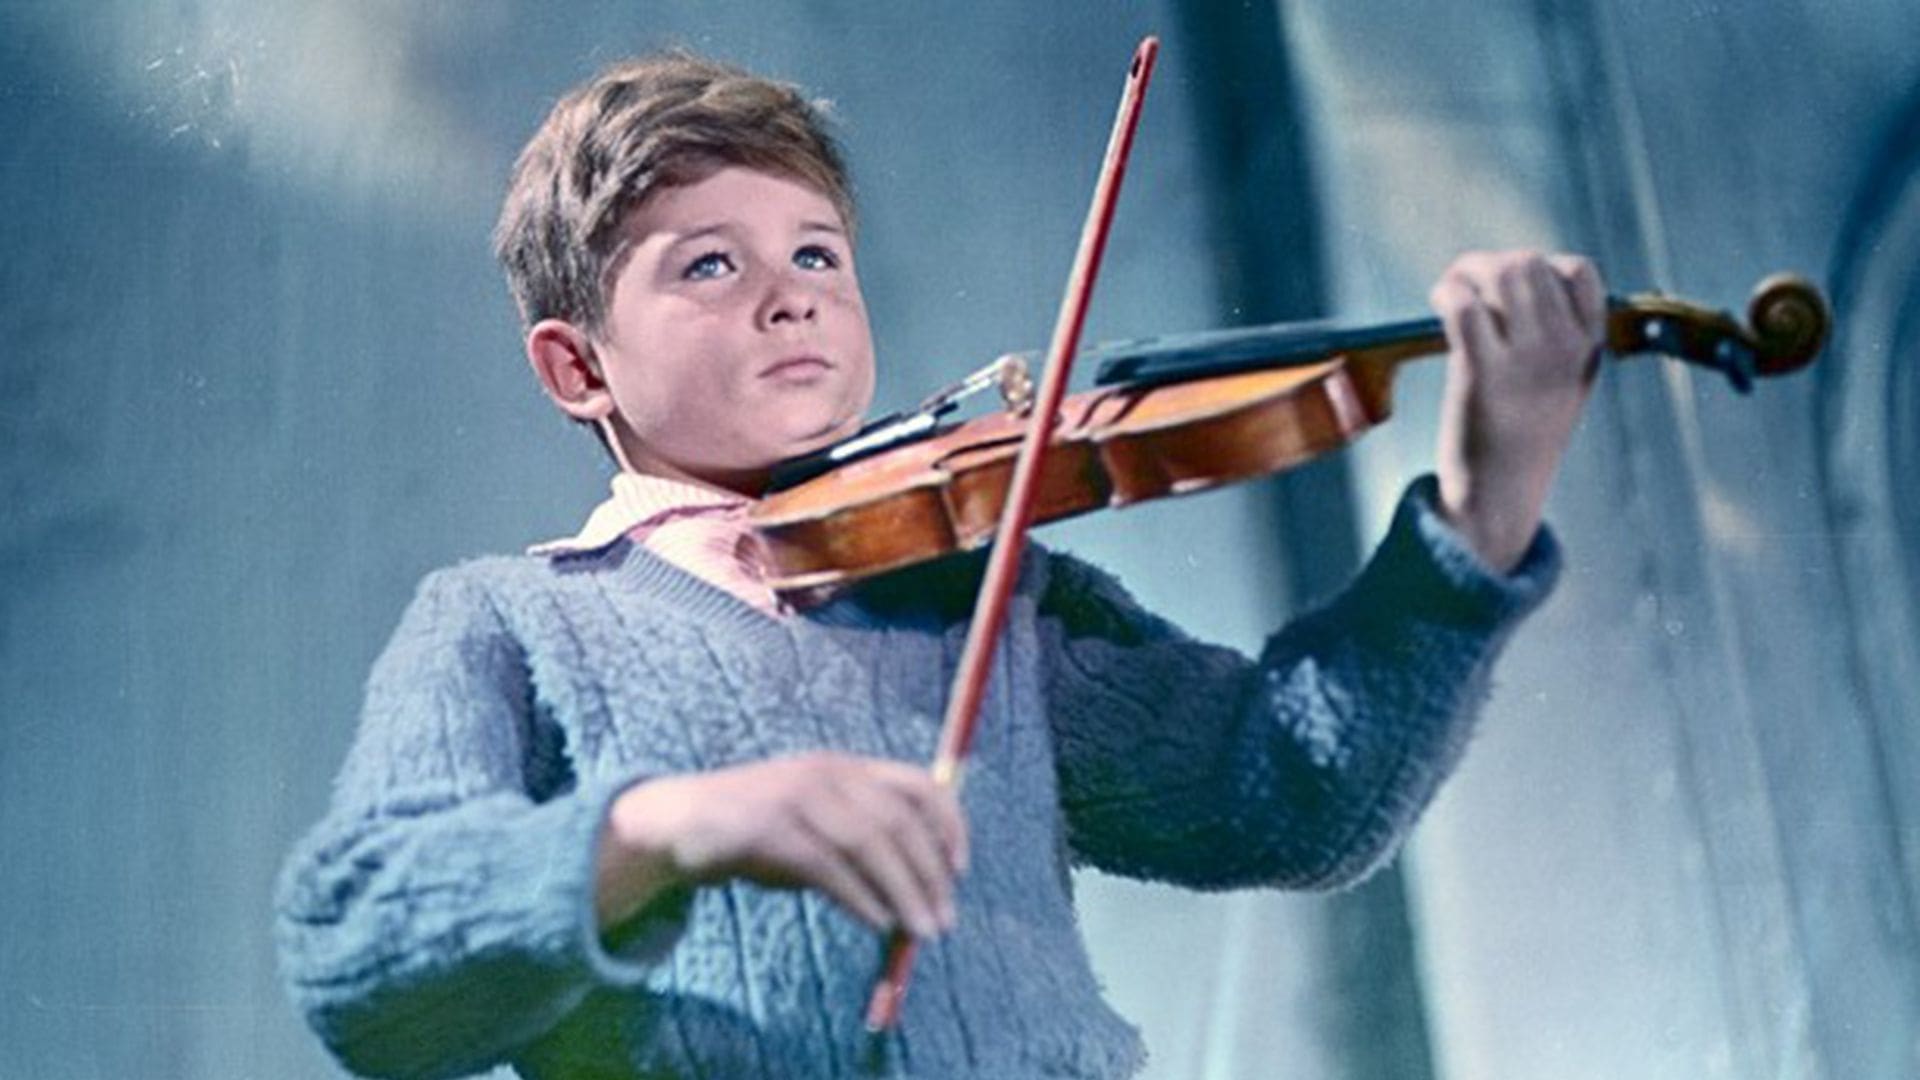 Illustration for the 1961 Tarkovsky film "The Steamroller and the Violin"